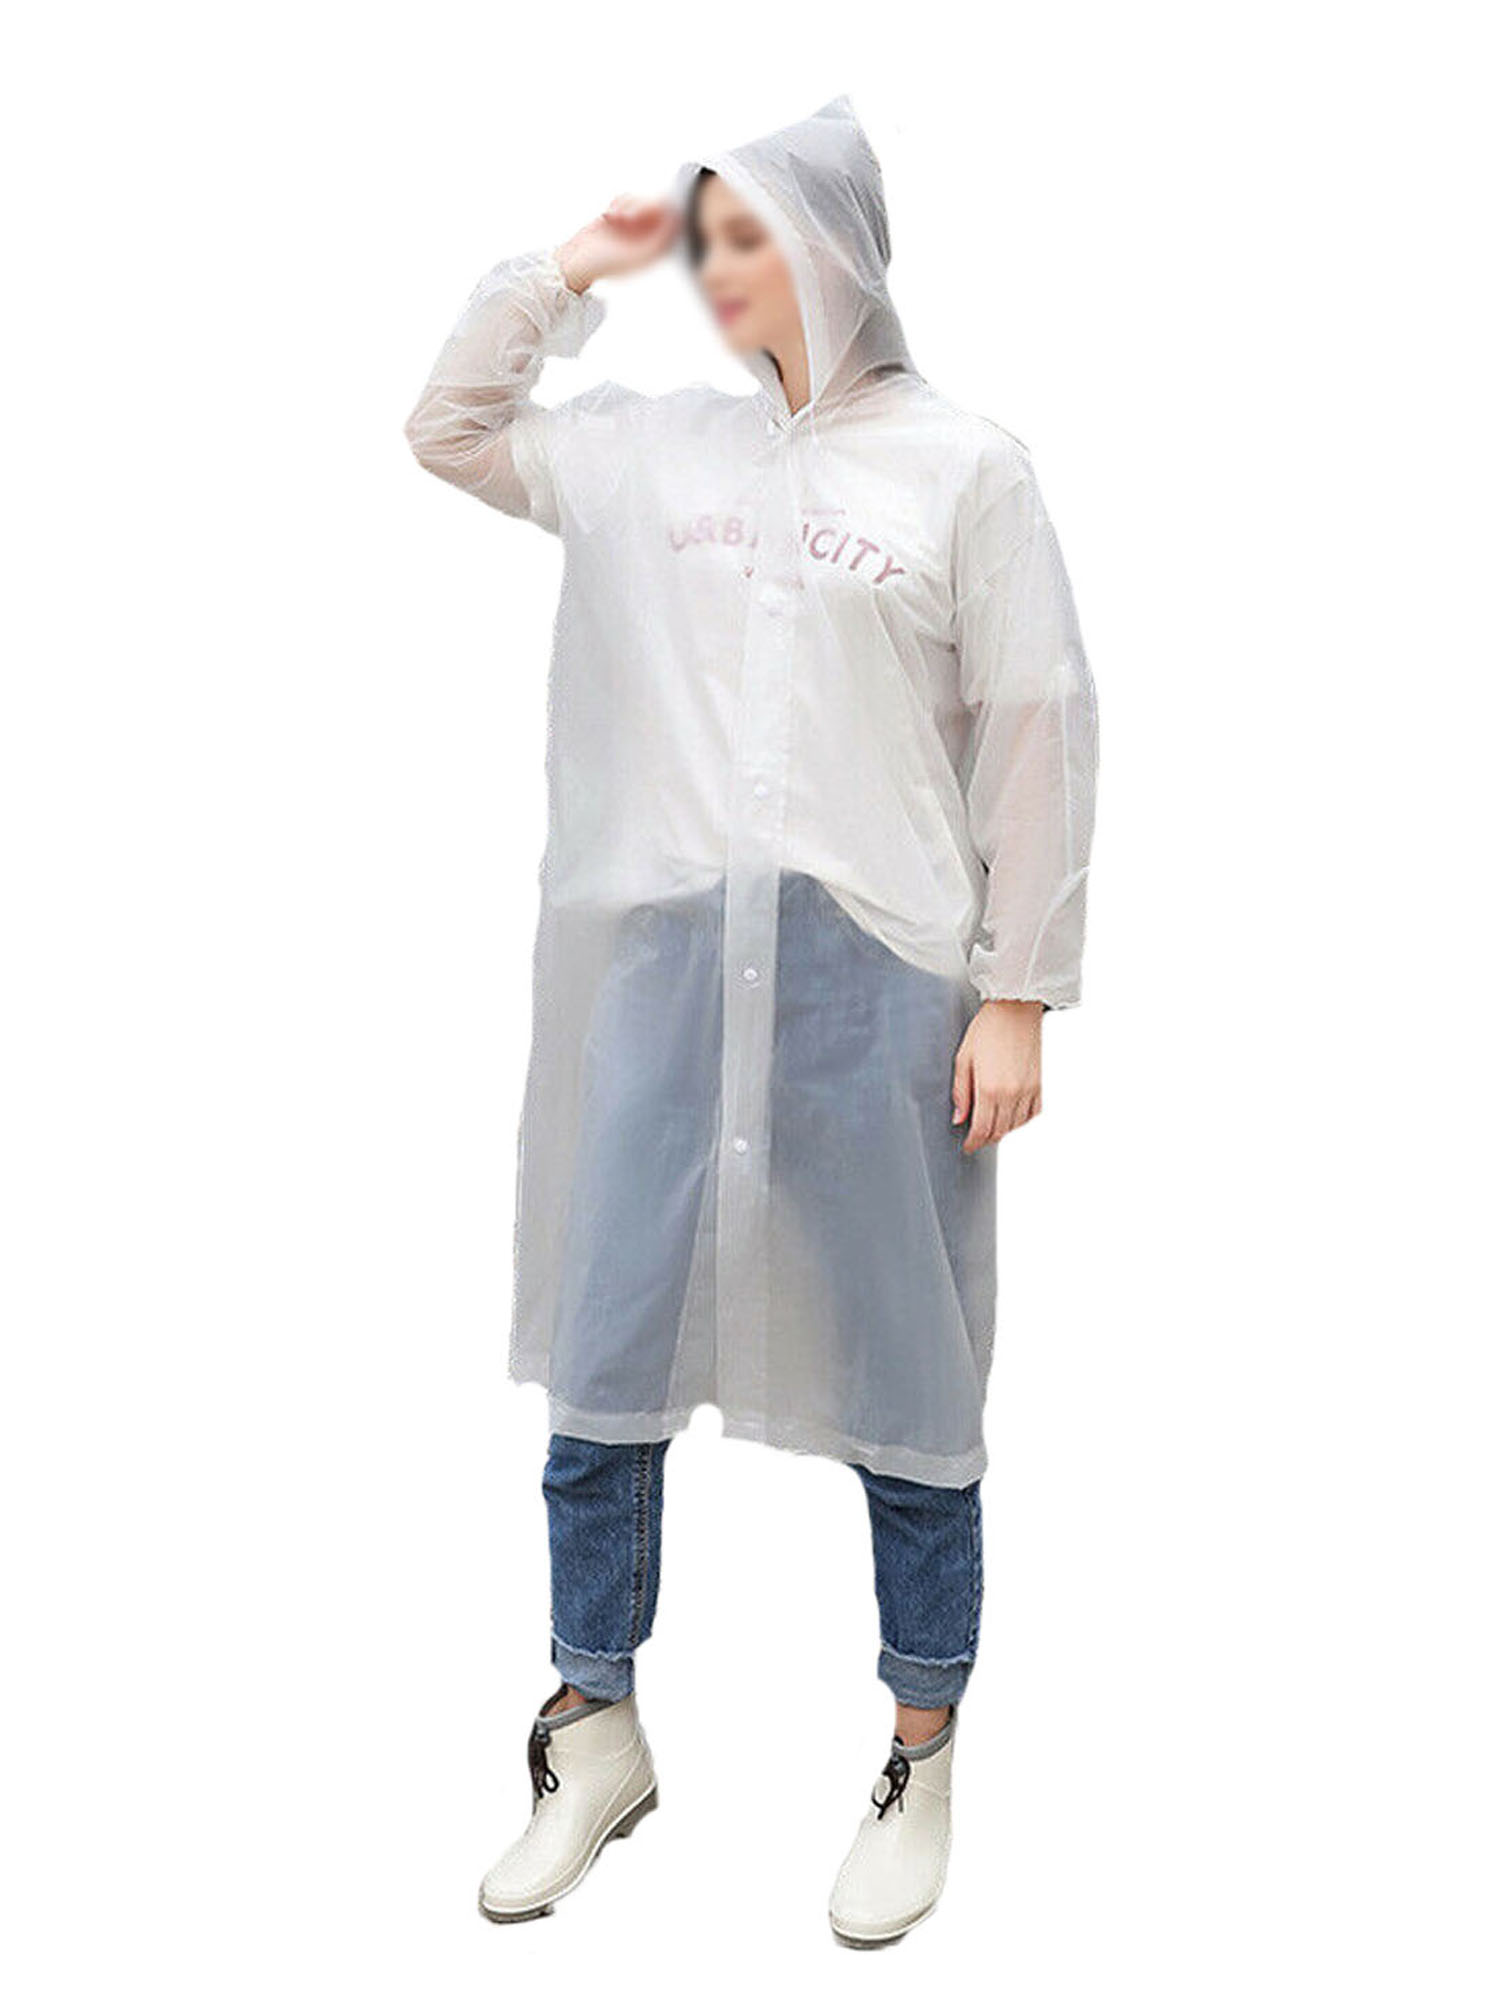 UnisexWaterproof Jacket Clear PVC Raincoat Rain Coat Hooded Poncho Rainwear - image 1 of 1